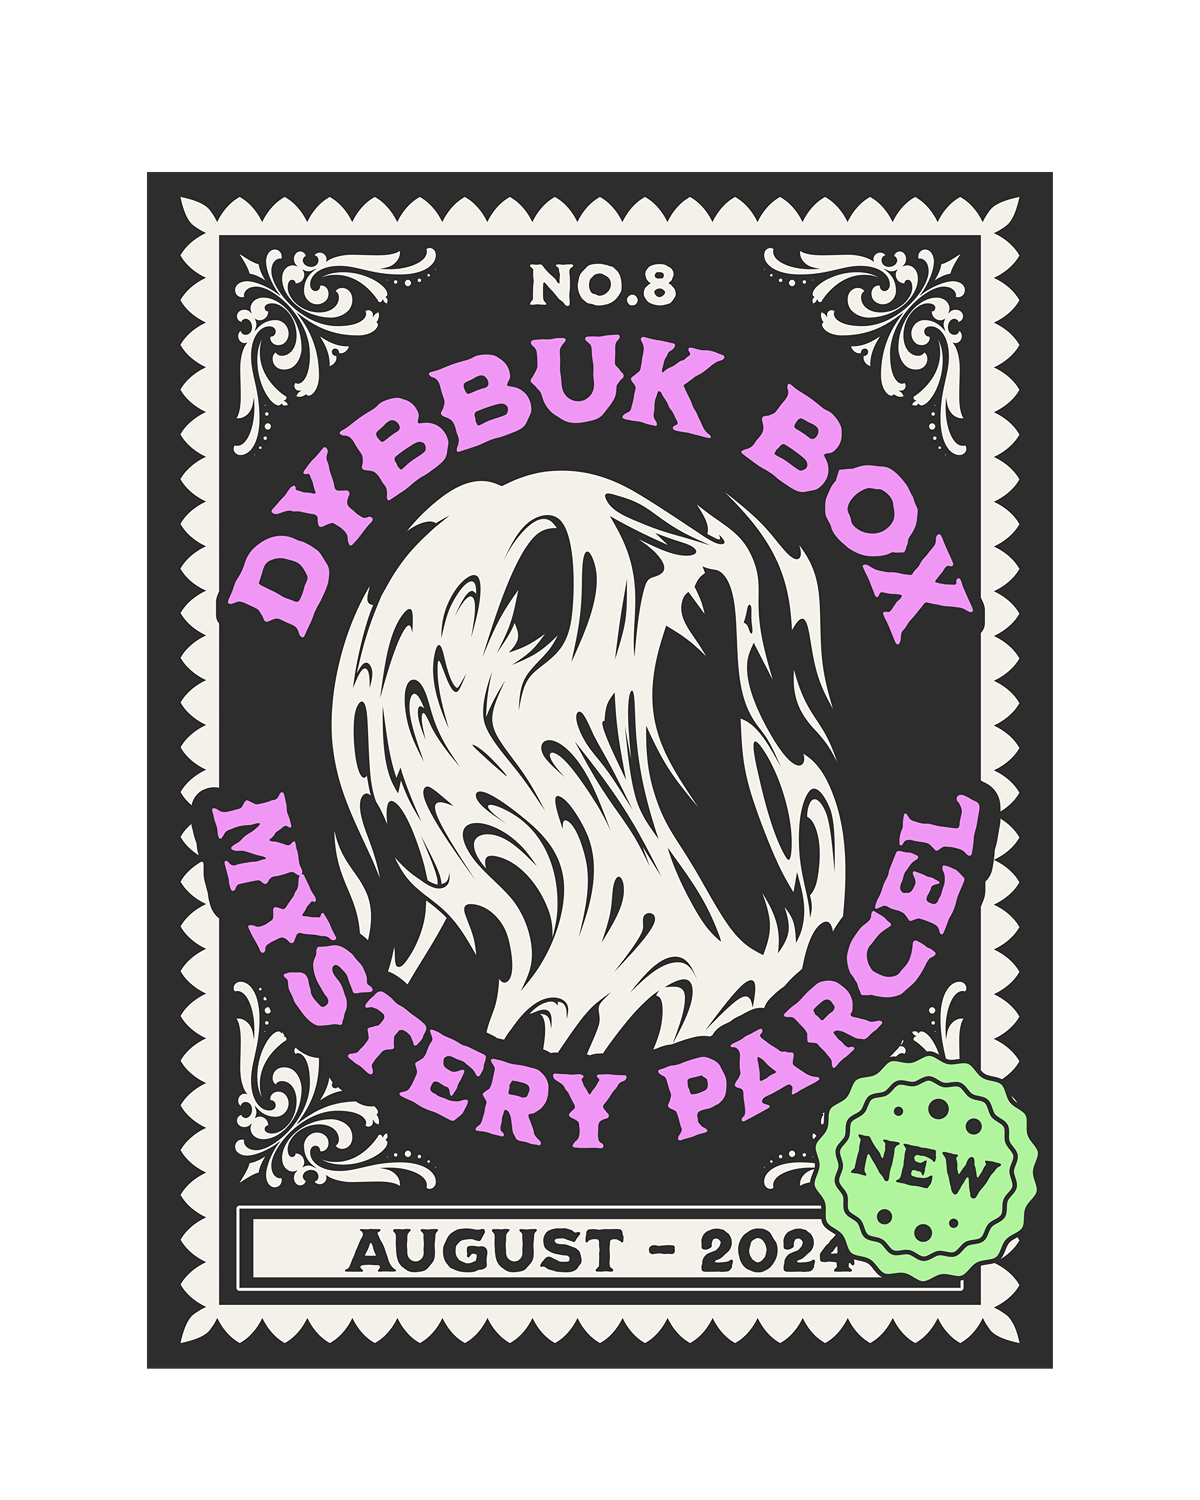 No. 8 - Dybbuk Box August 2024